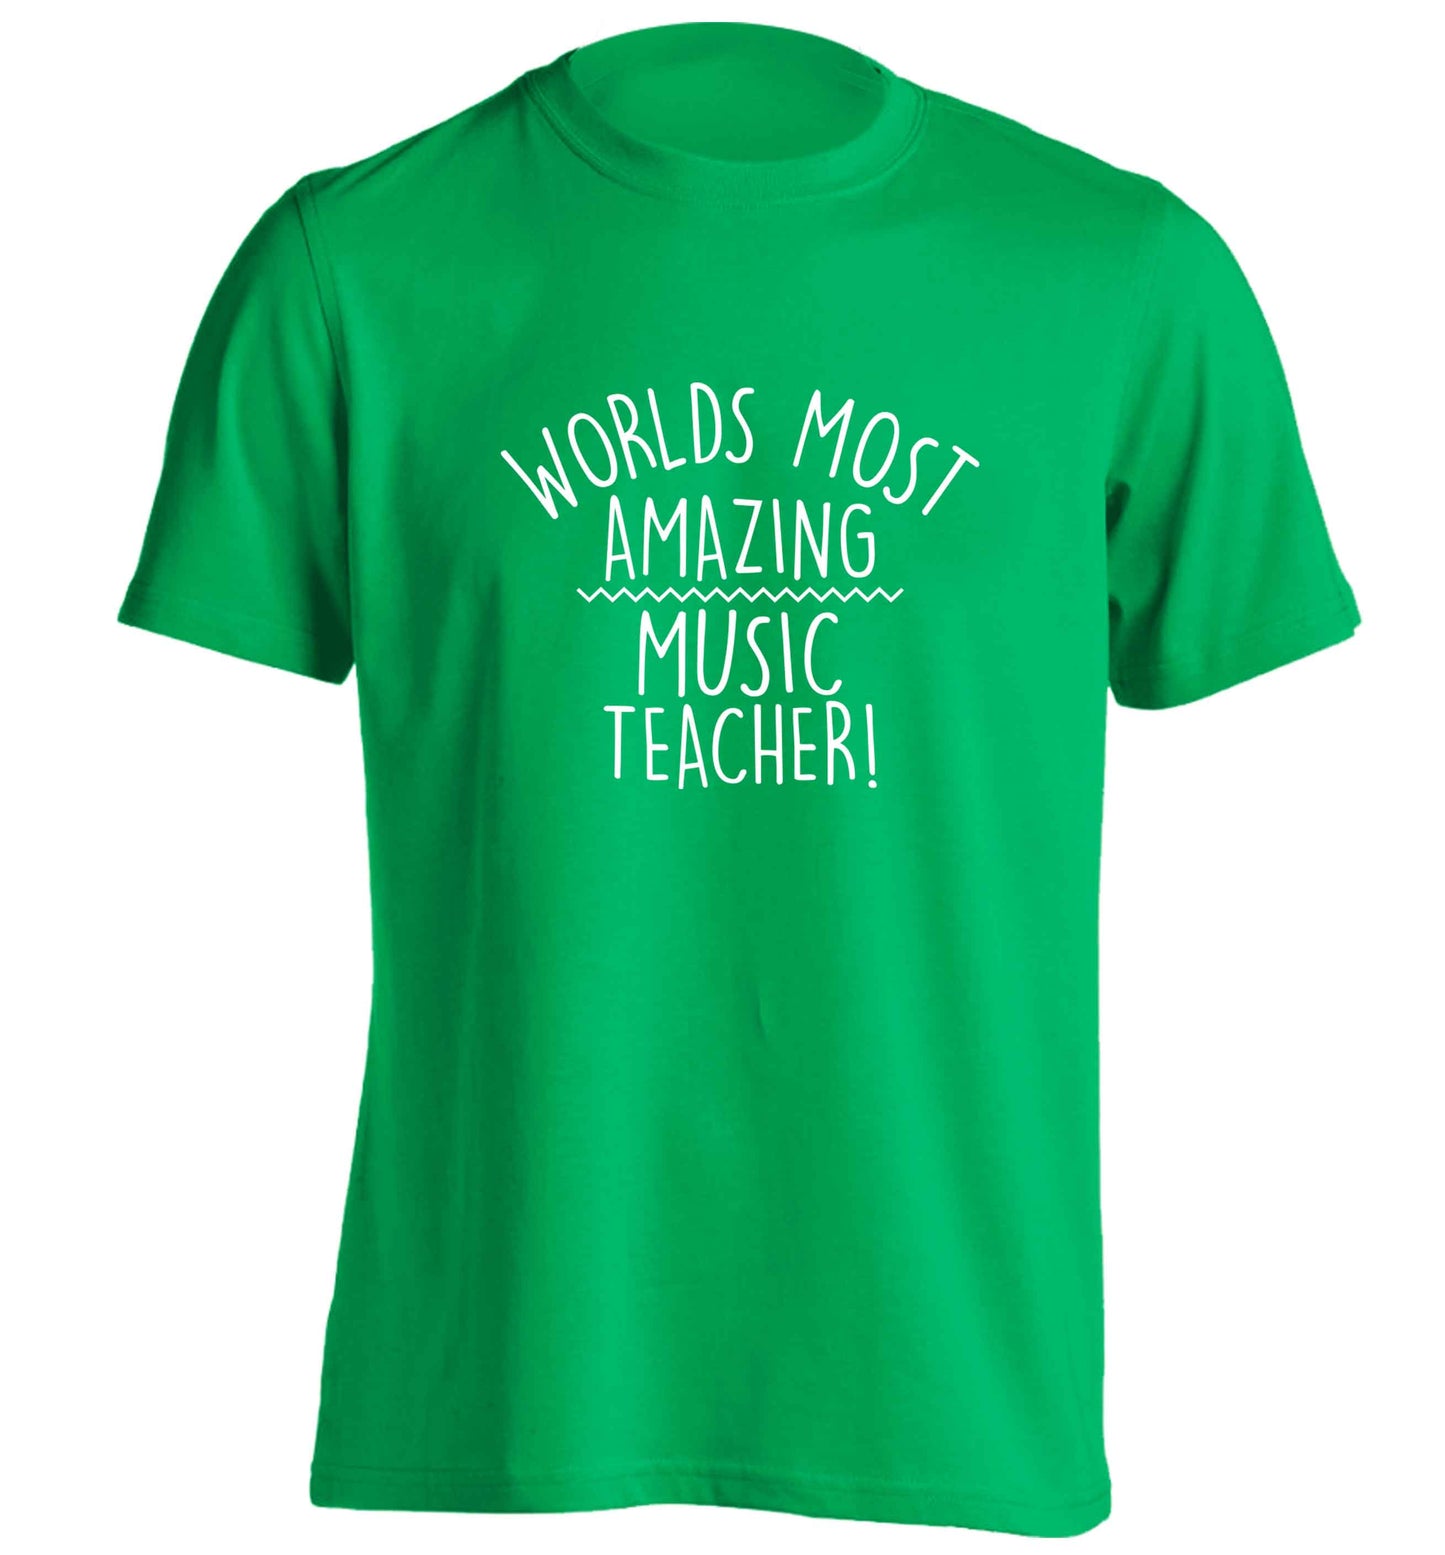 Worlds most amazing music teacher adults unisex green Tshirt 2XL